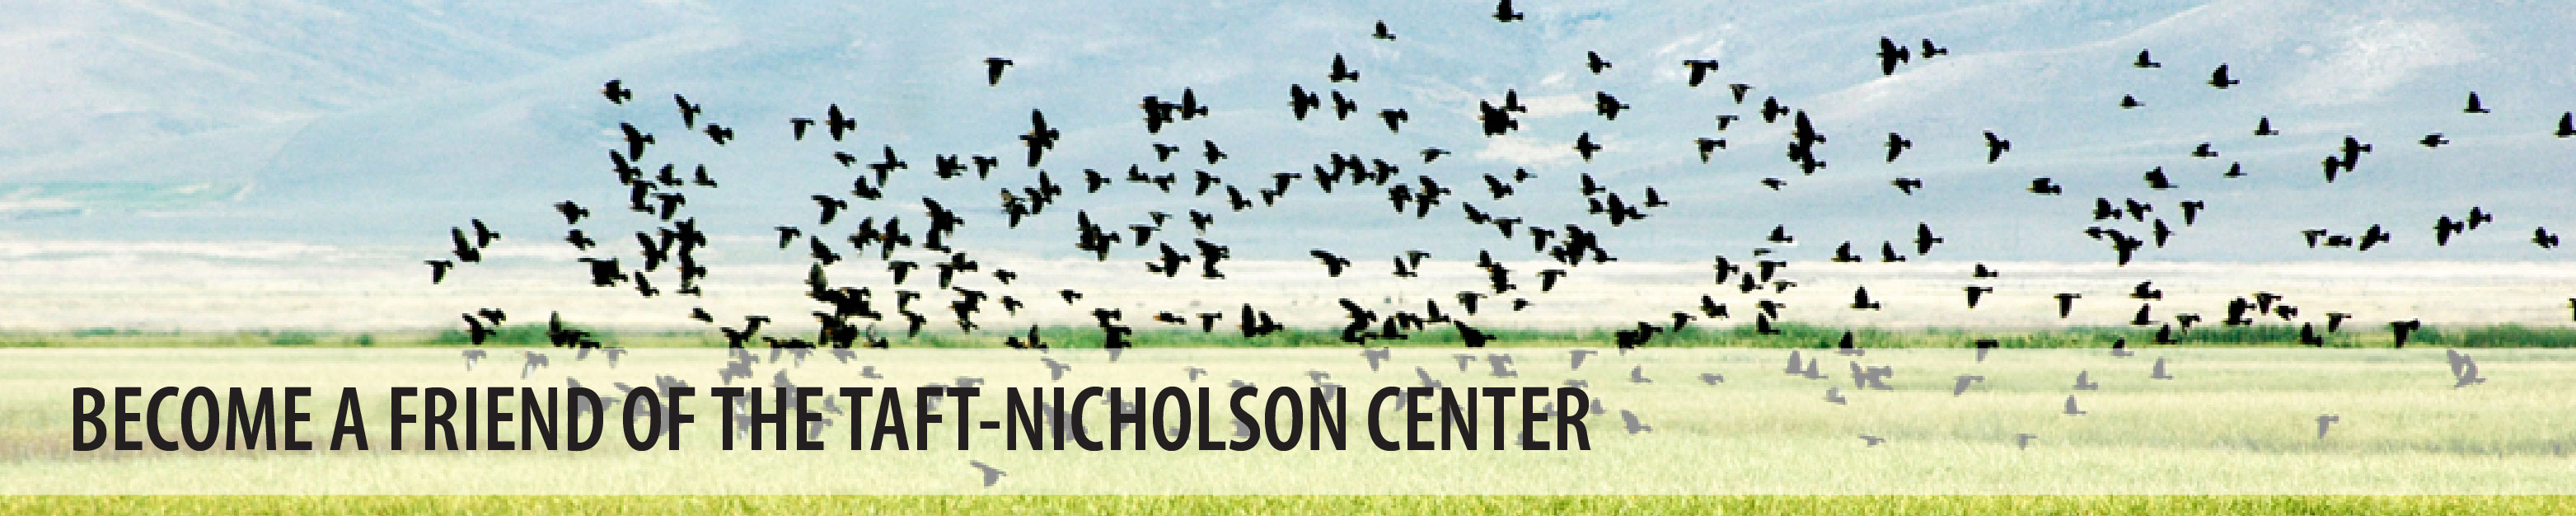 Become a Friend of the Taft-Nicholson Center